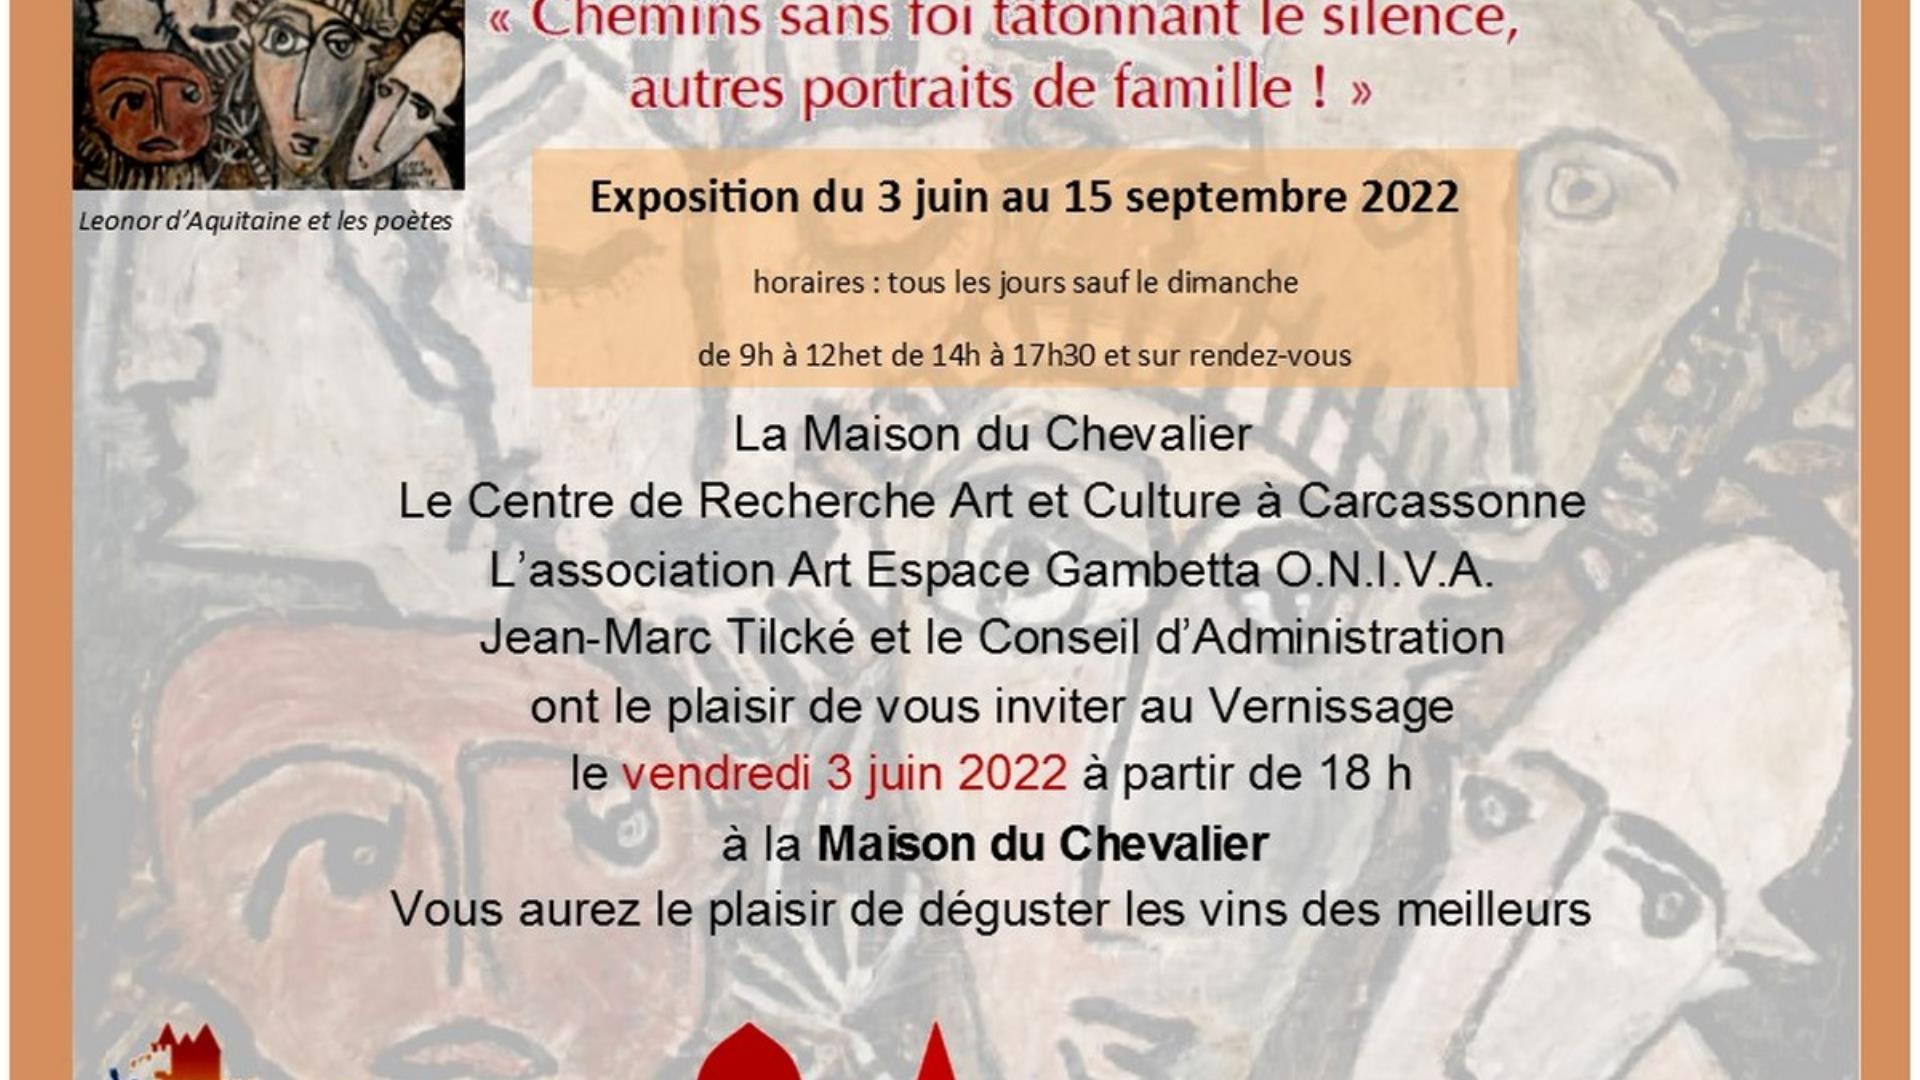 Pepe Donate expo Maison du Chevalier